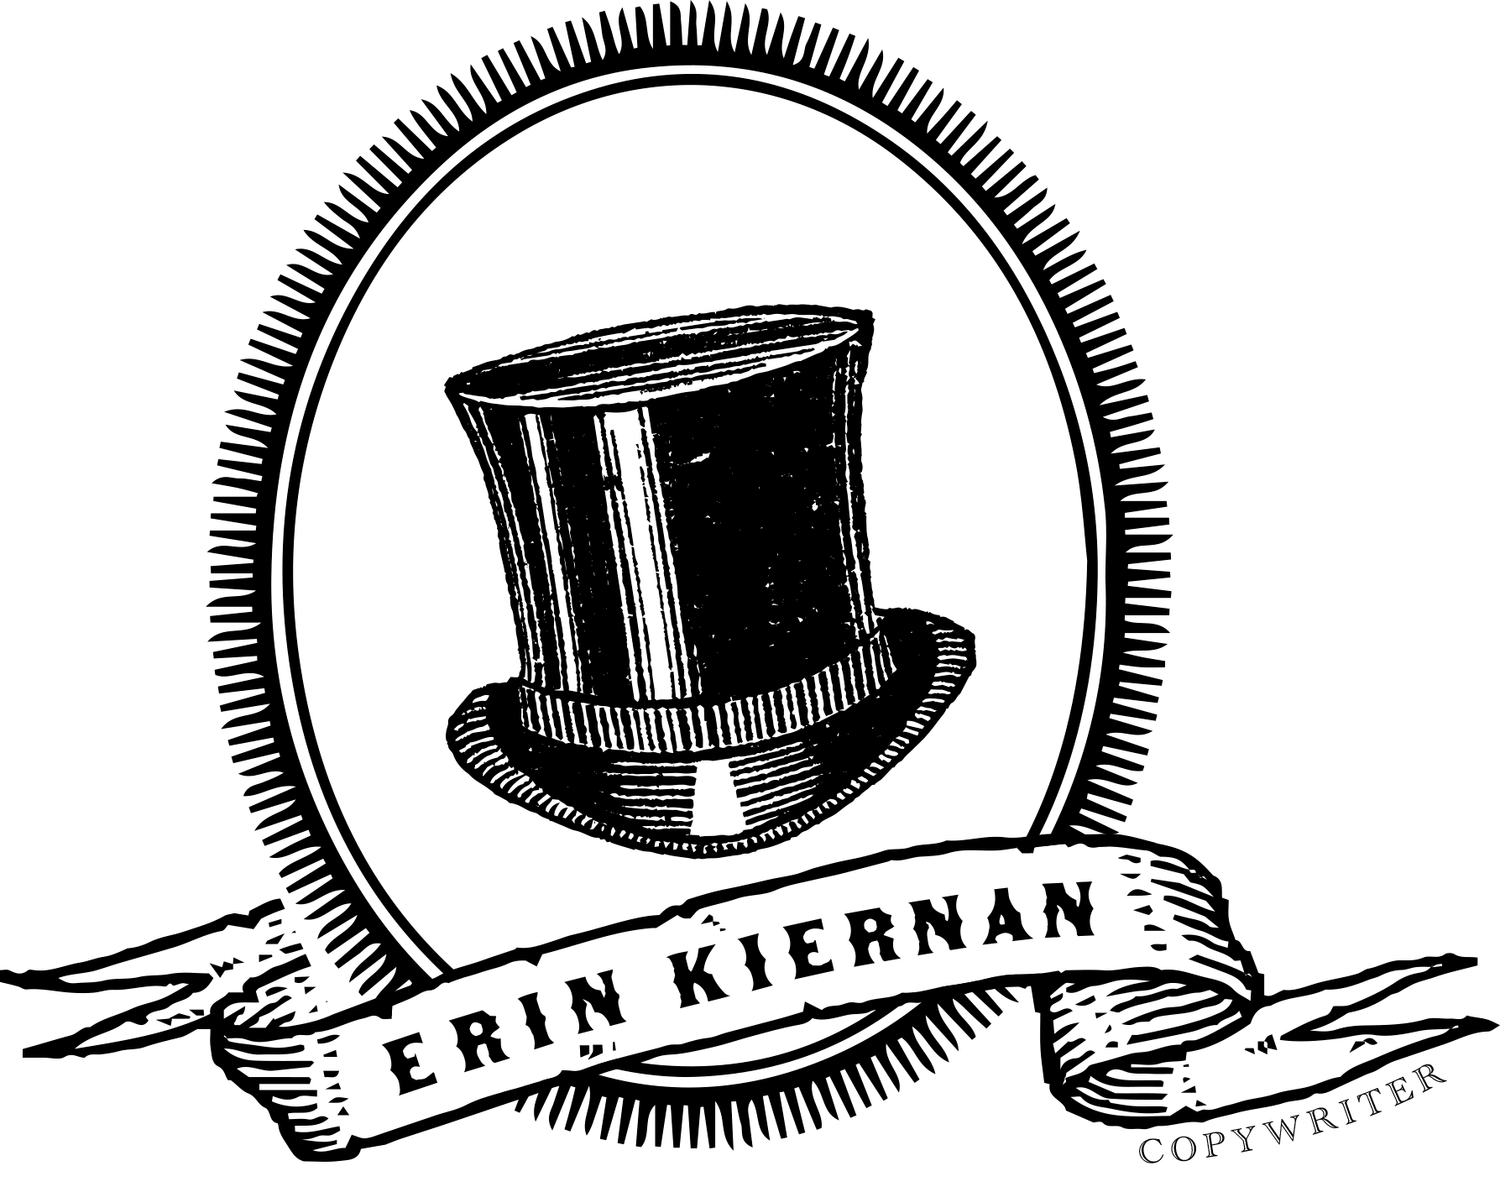 Erin Kiernan